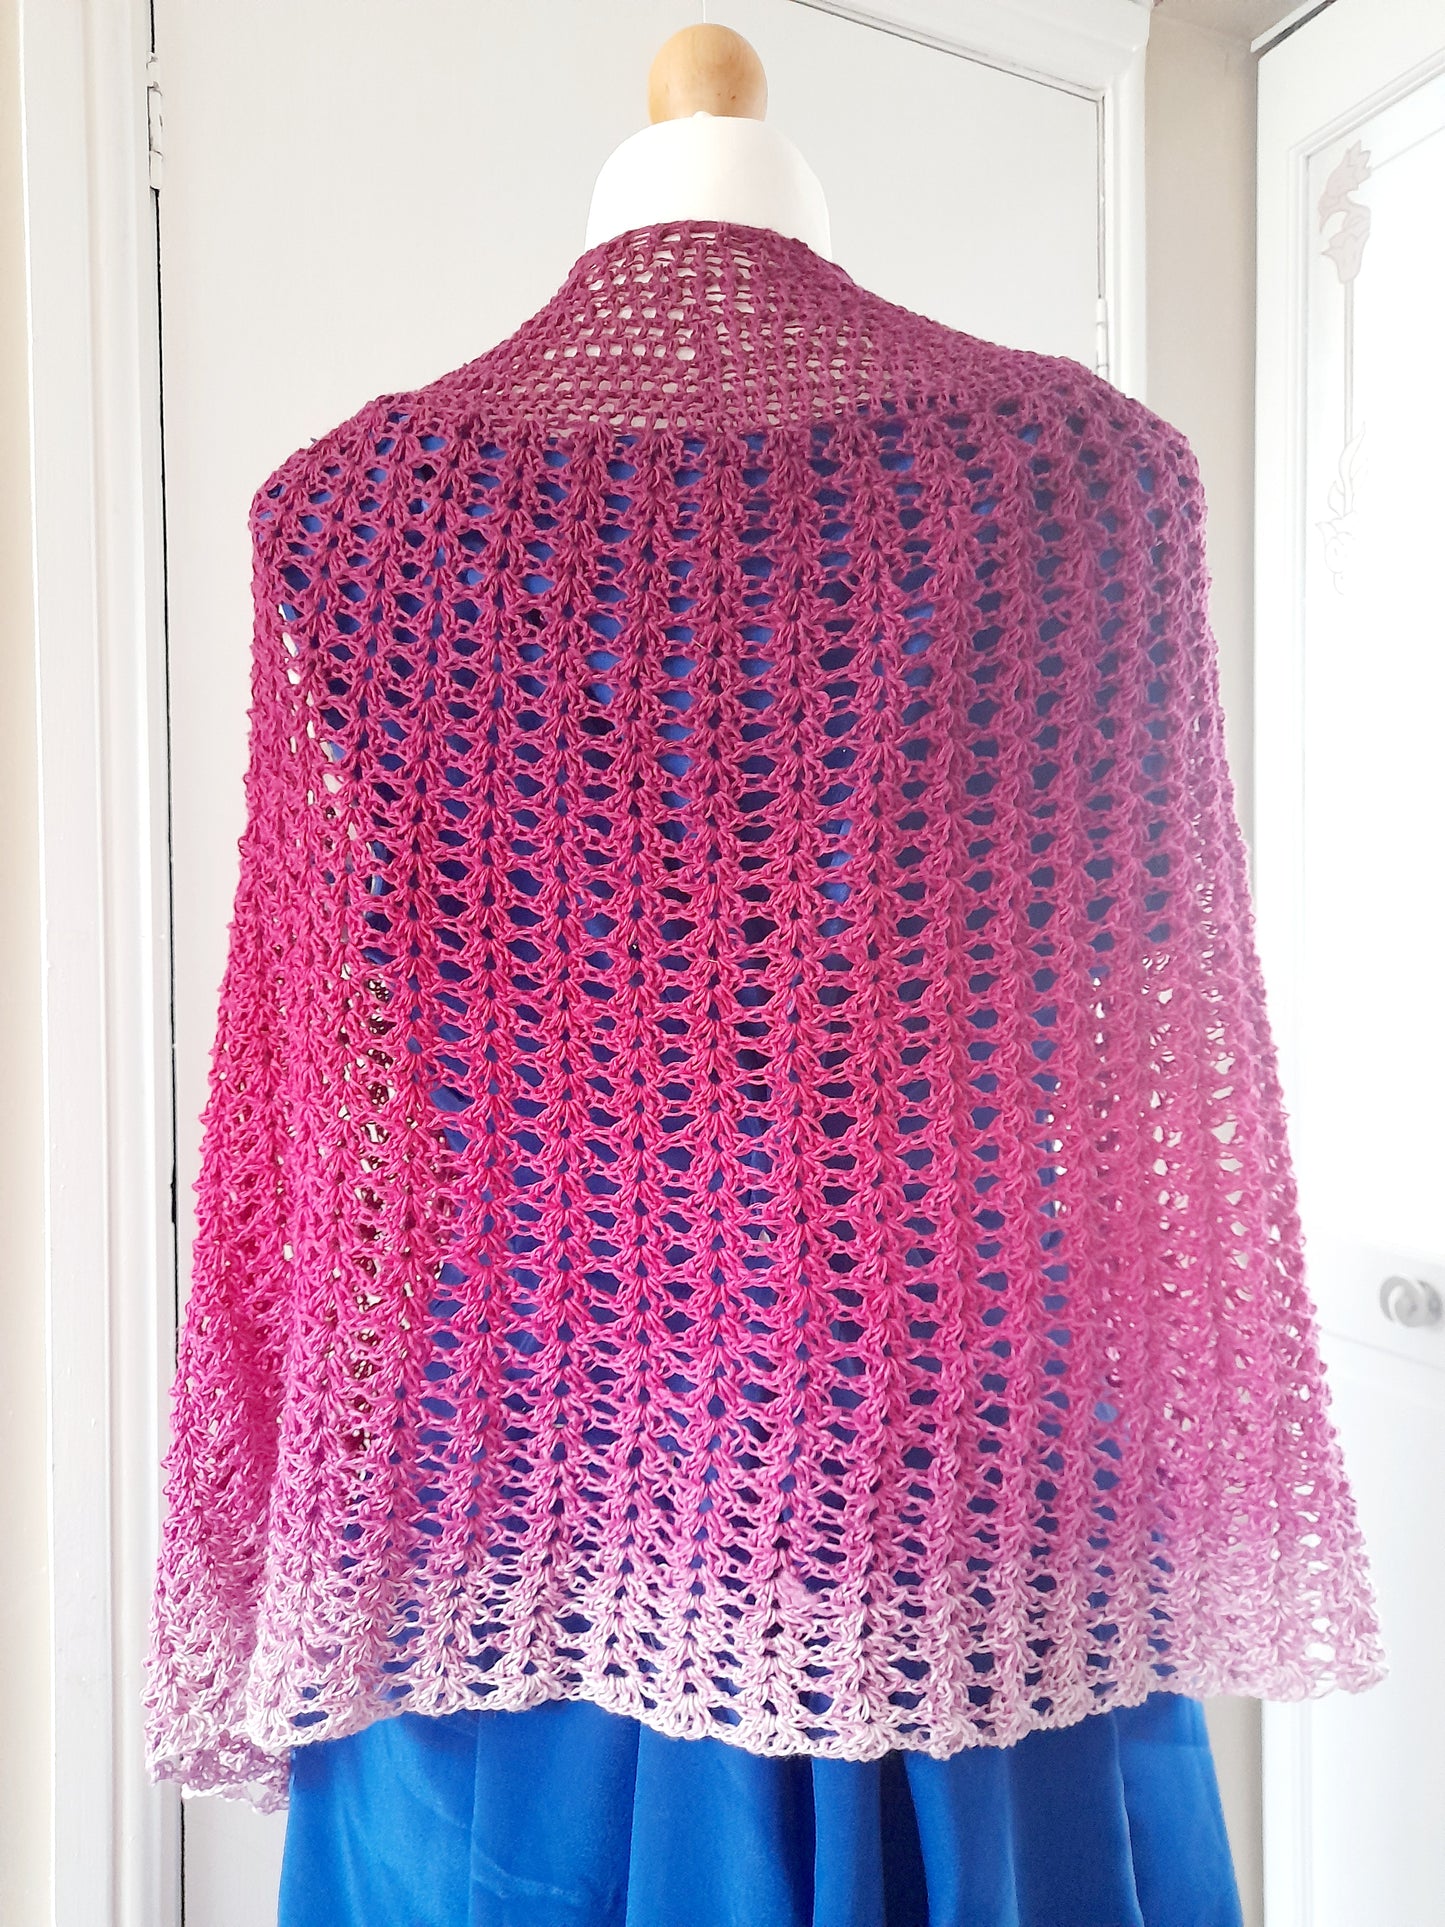 Double v stitch crochet. Half shell crochet stitch. easy lace crochet shawl pattern. 